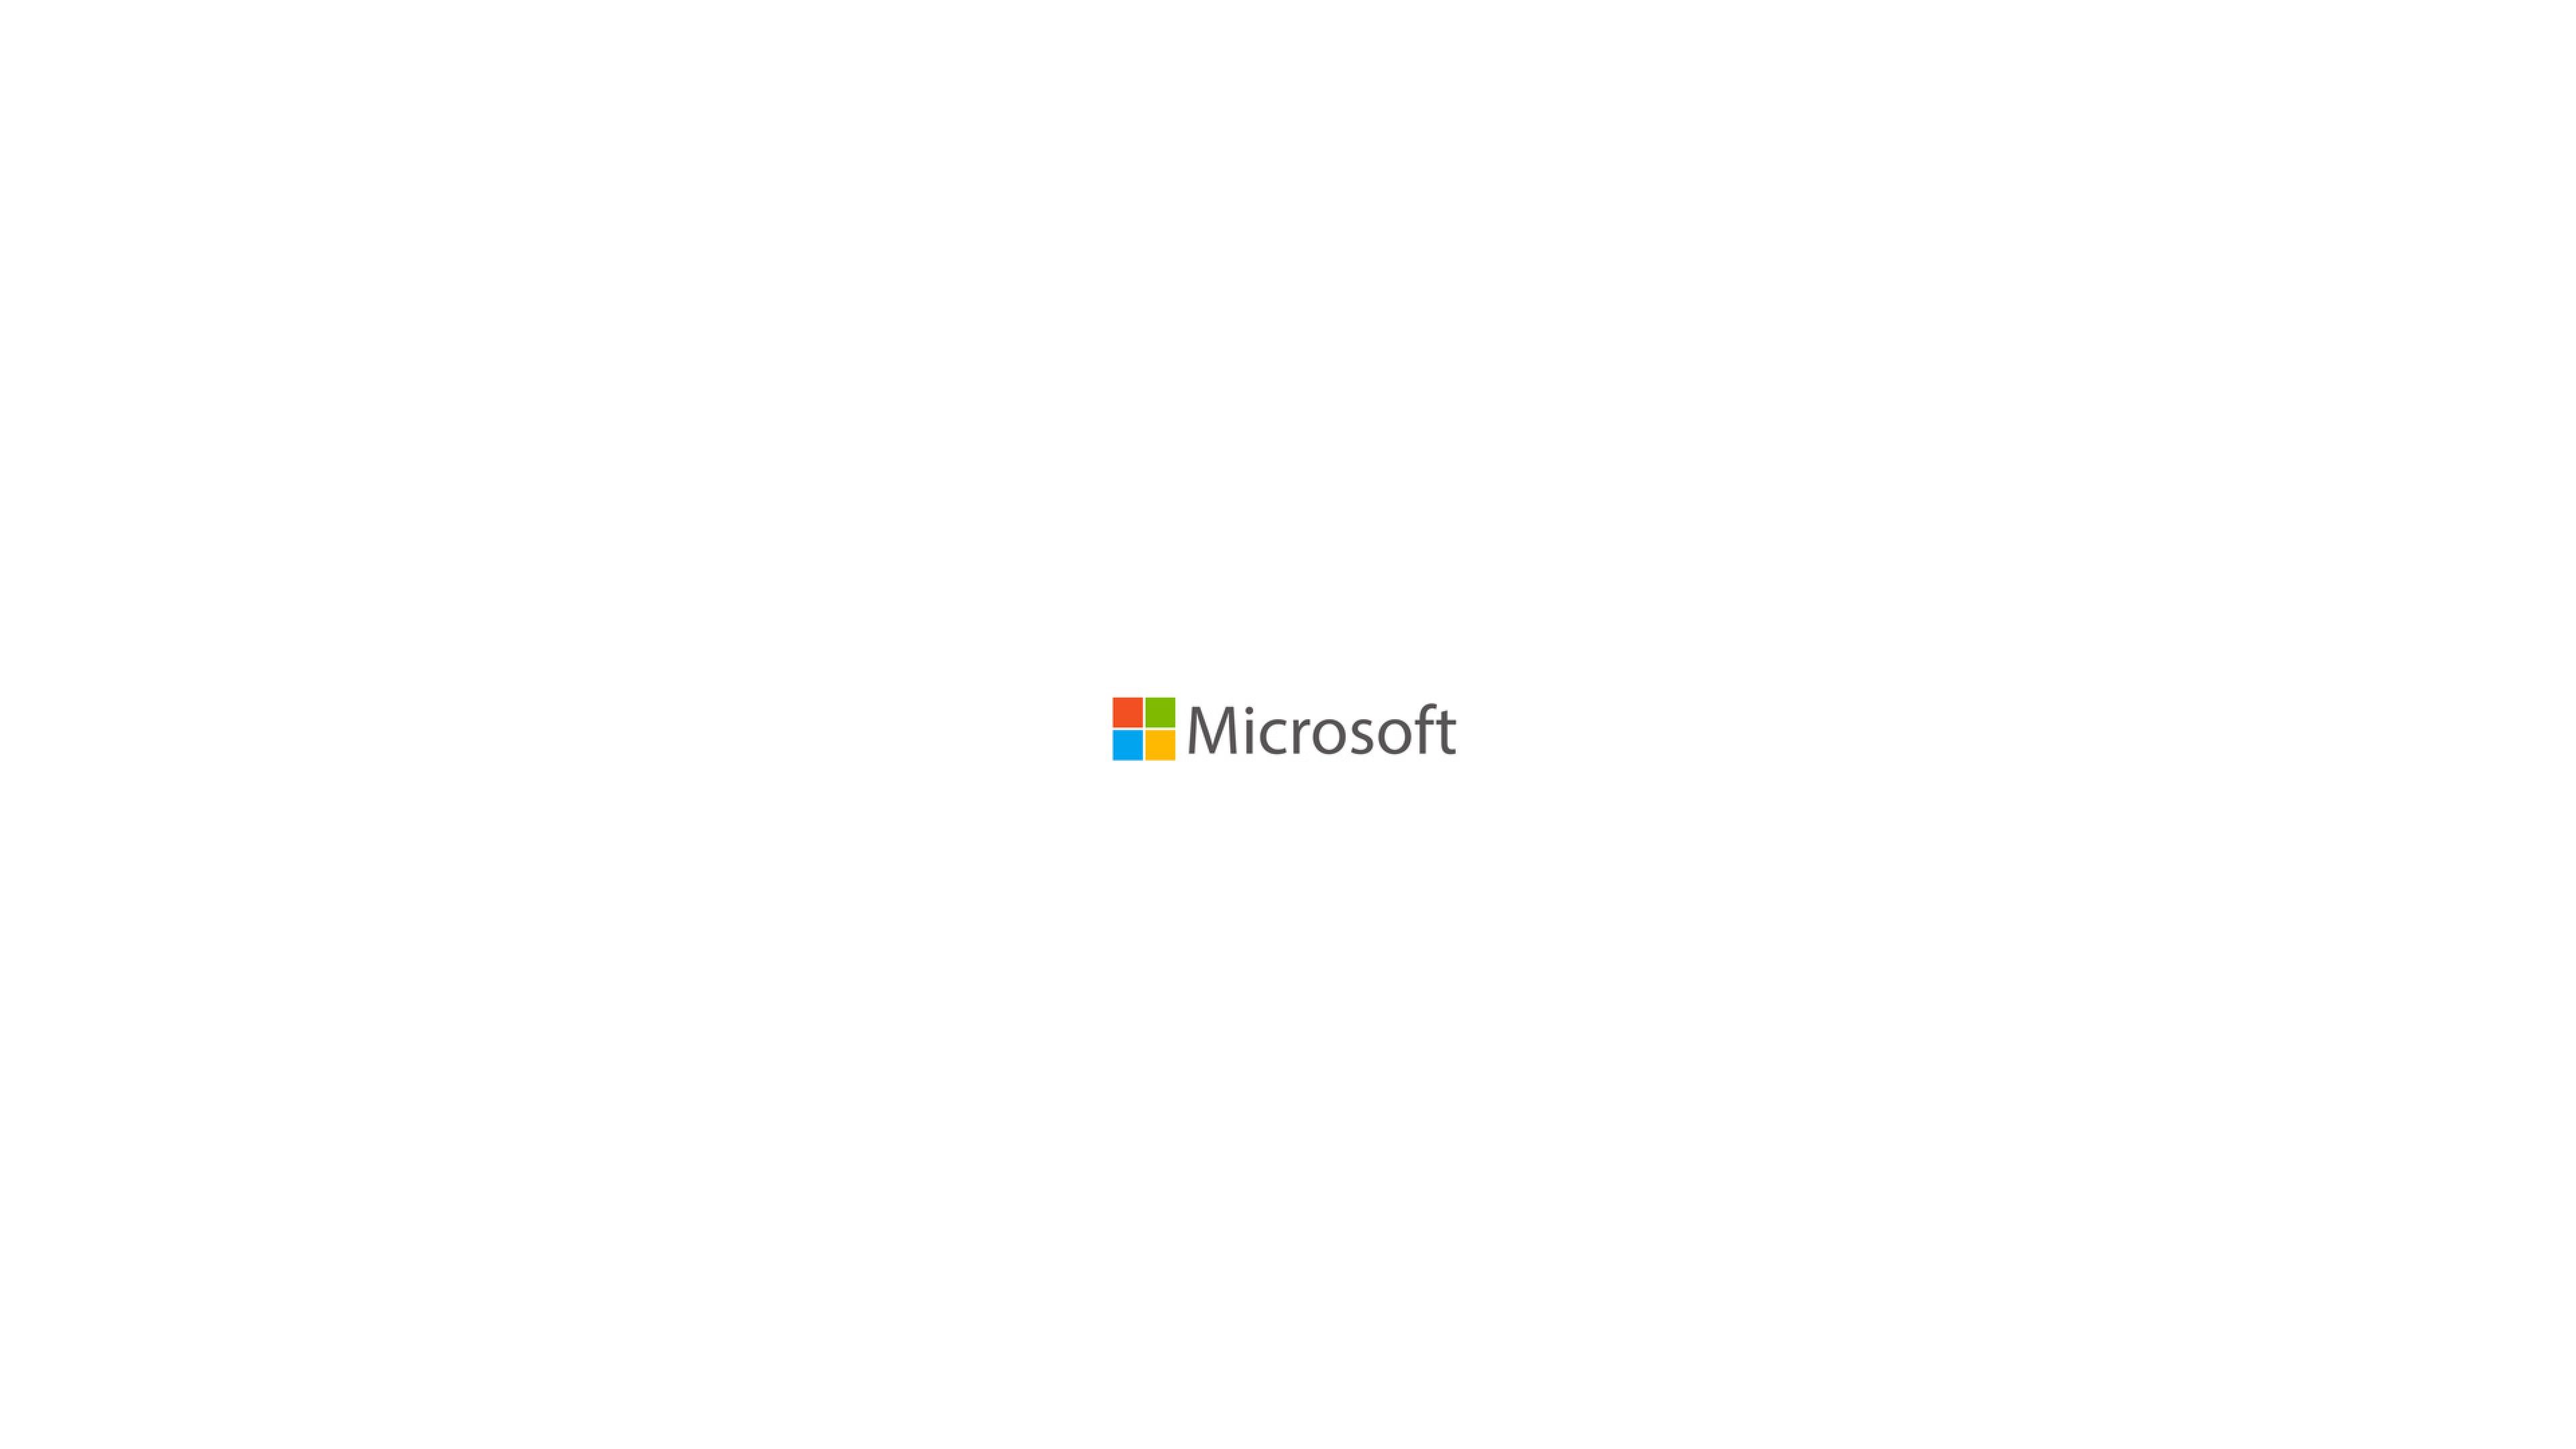 Download Free Microsoft Logo Wallpaper for Desktop and Mobiles 4K